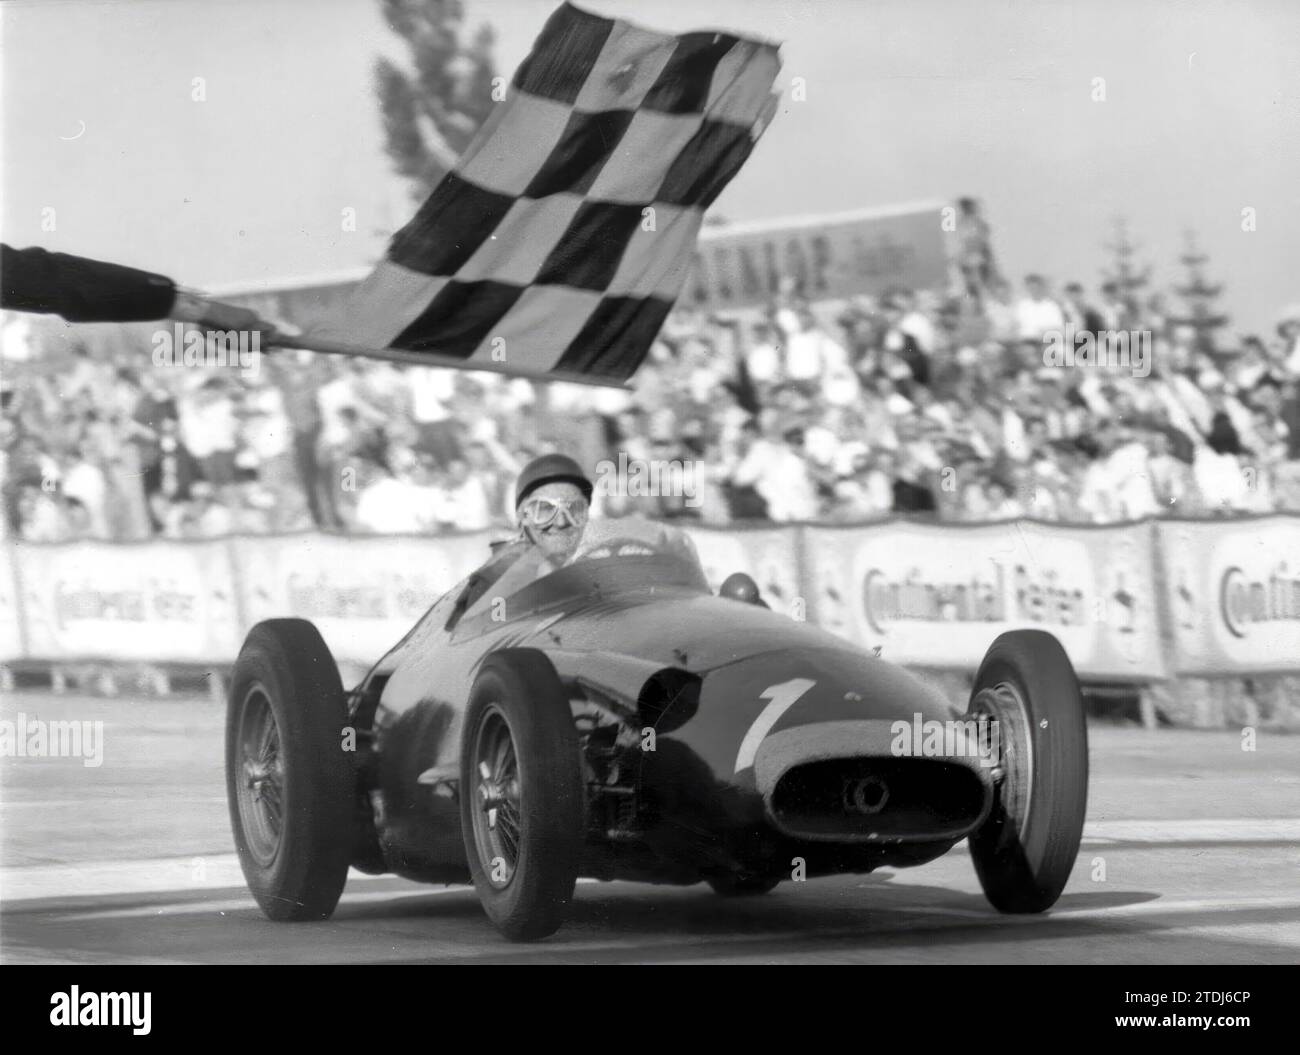 Germany, 08/04/1957. Juan Manuel Fangio entering the finish line of the 1957 German Grand Prix driving his Maserati. Credit: Album / Archivo ABC Stock Photo